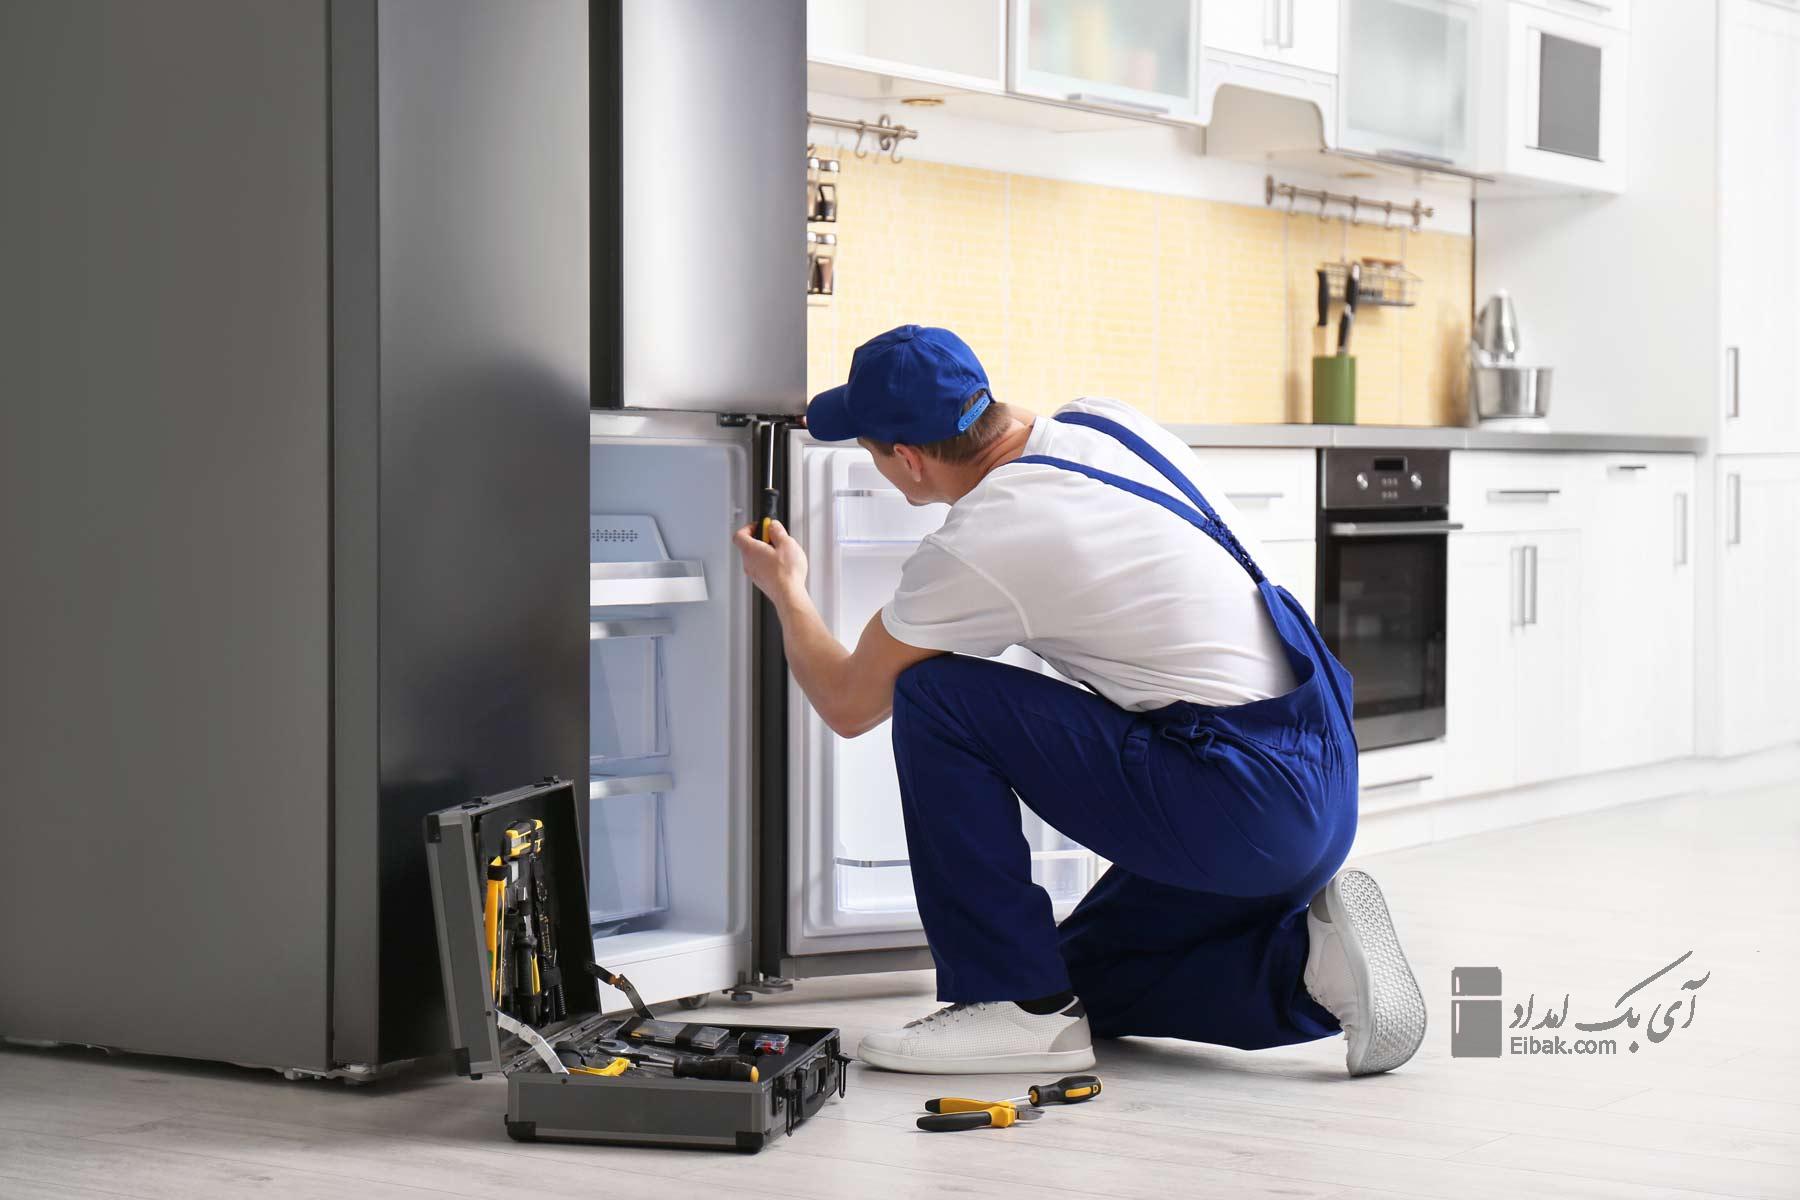 homeguide repair technician fixing a refrigerator and freezer 1